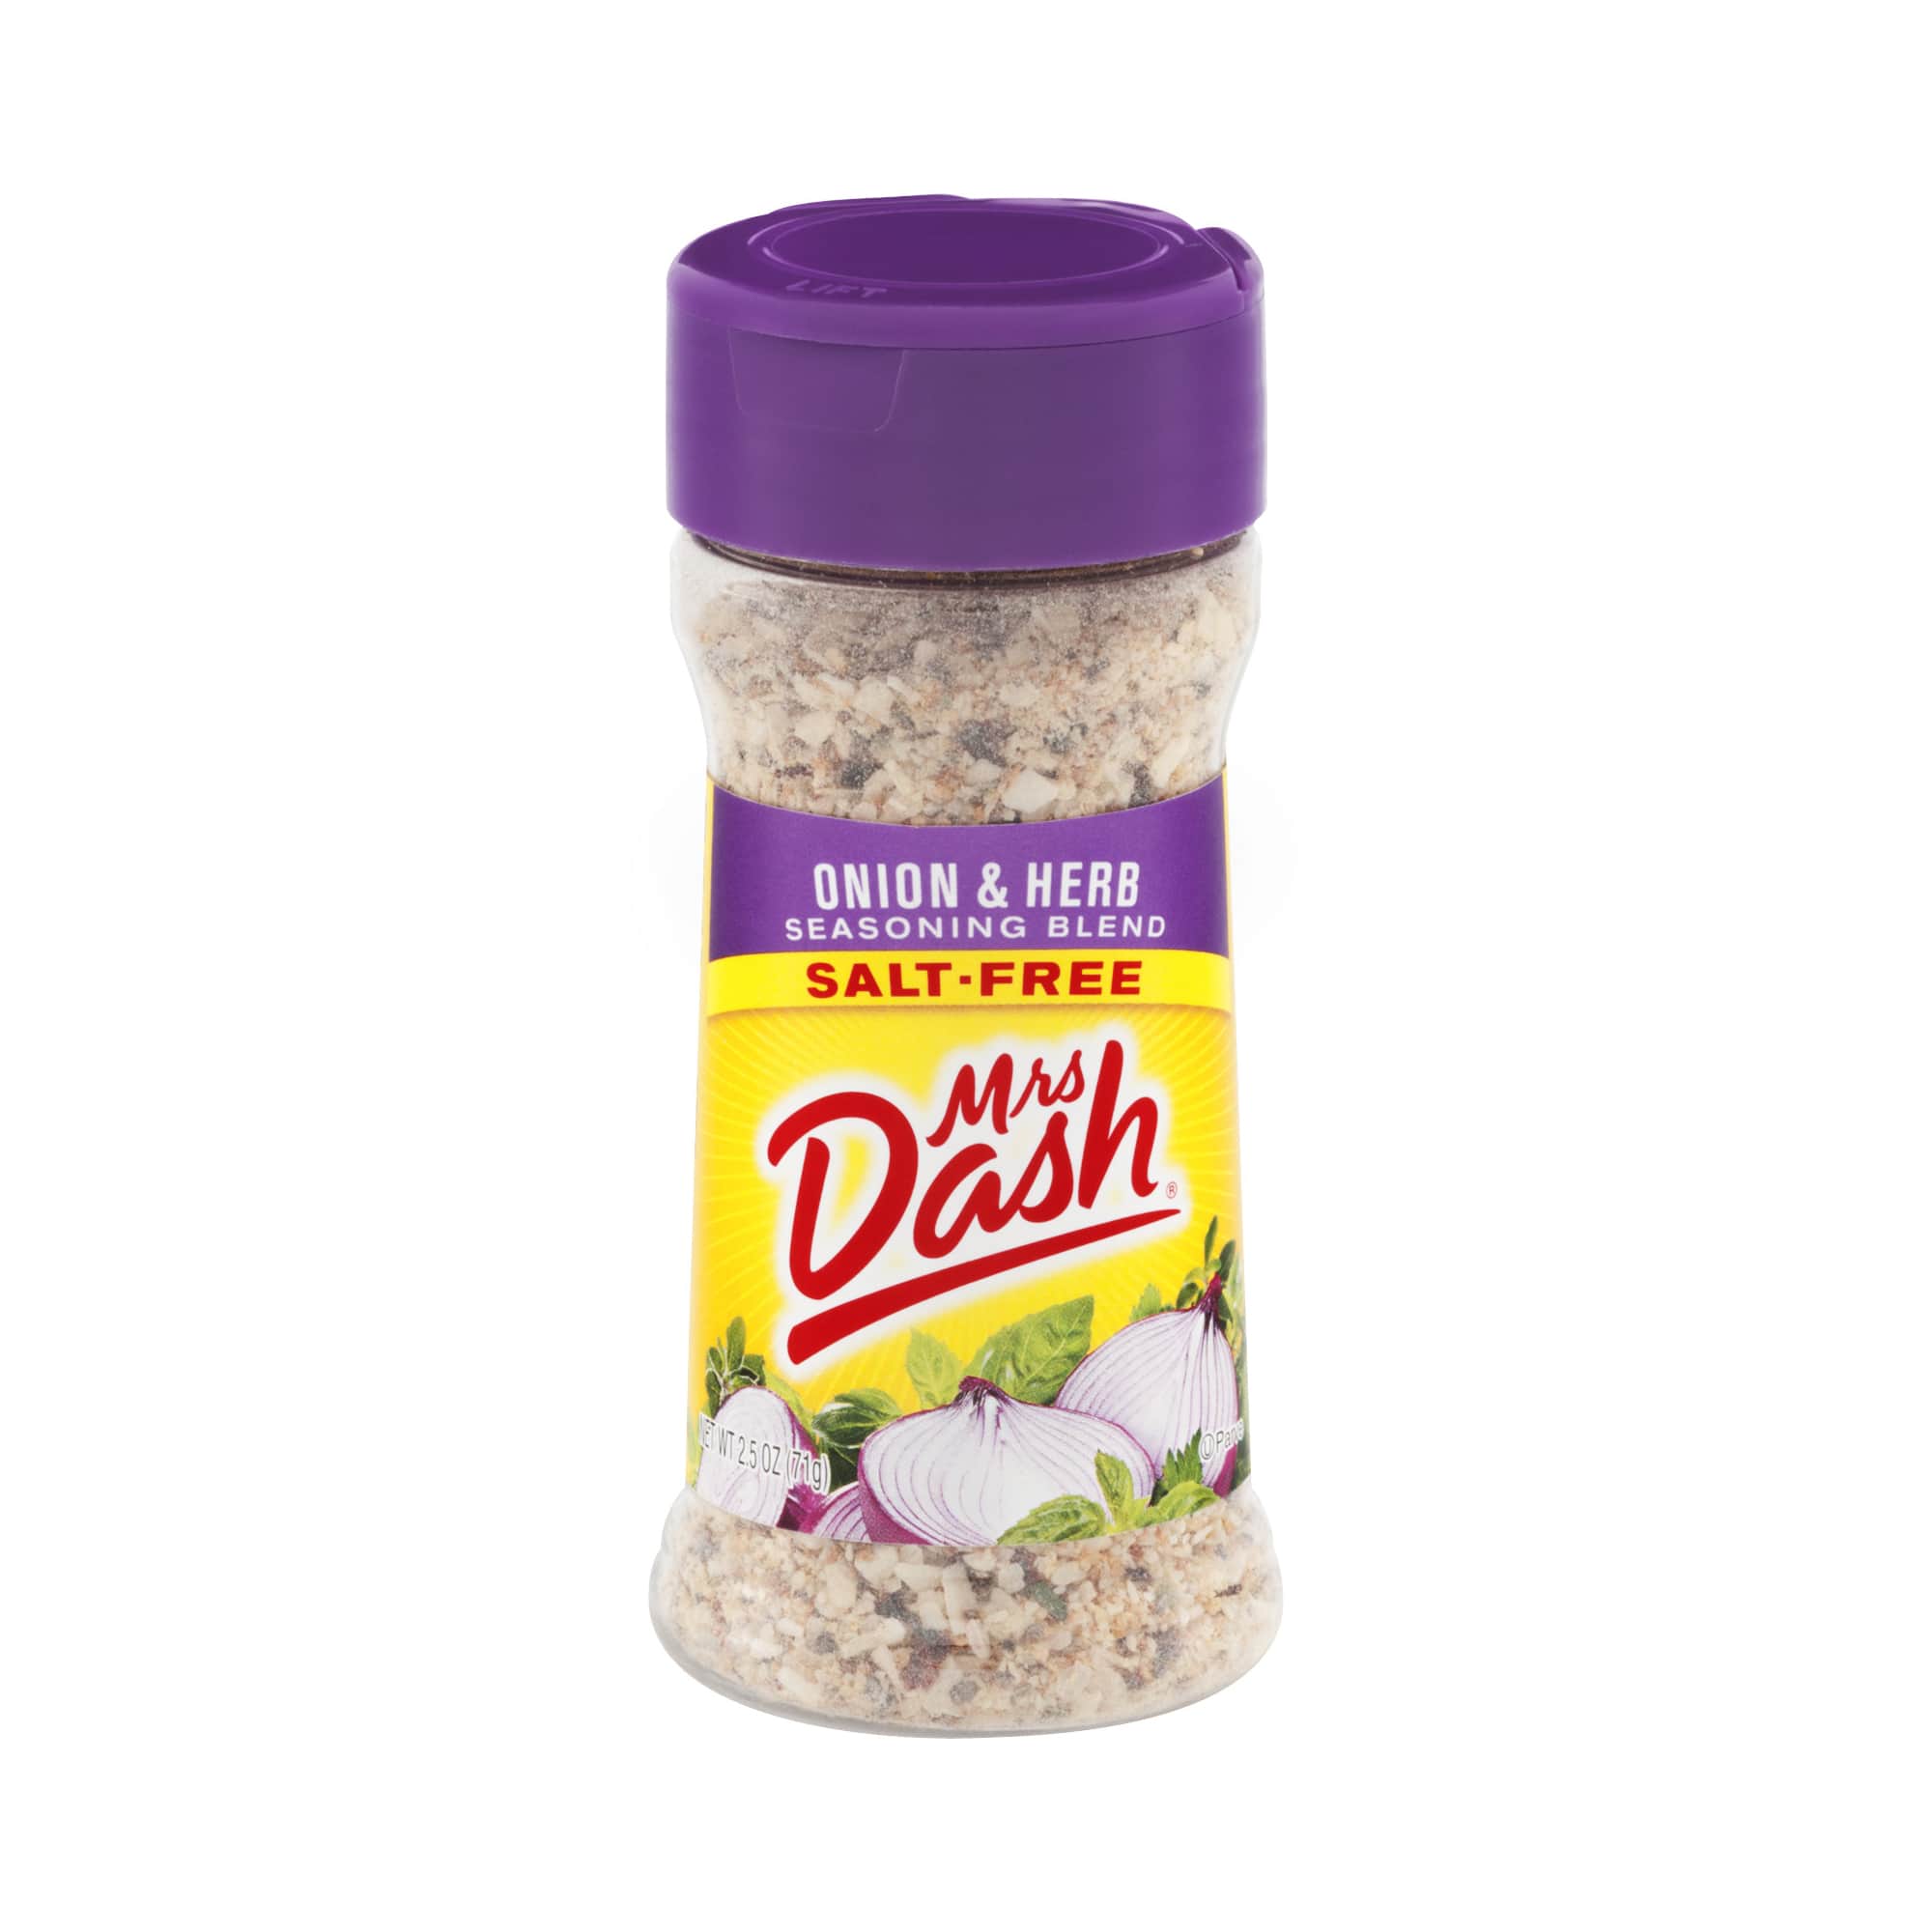 Dash Salt-Free Seasoning Blend, Garlic & Herb, 2.5 Ounce